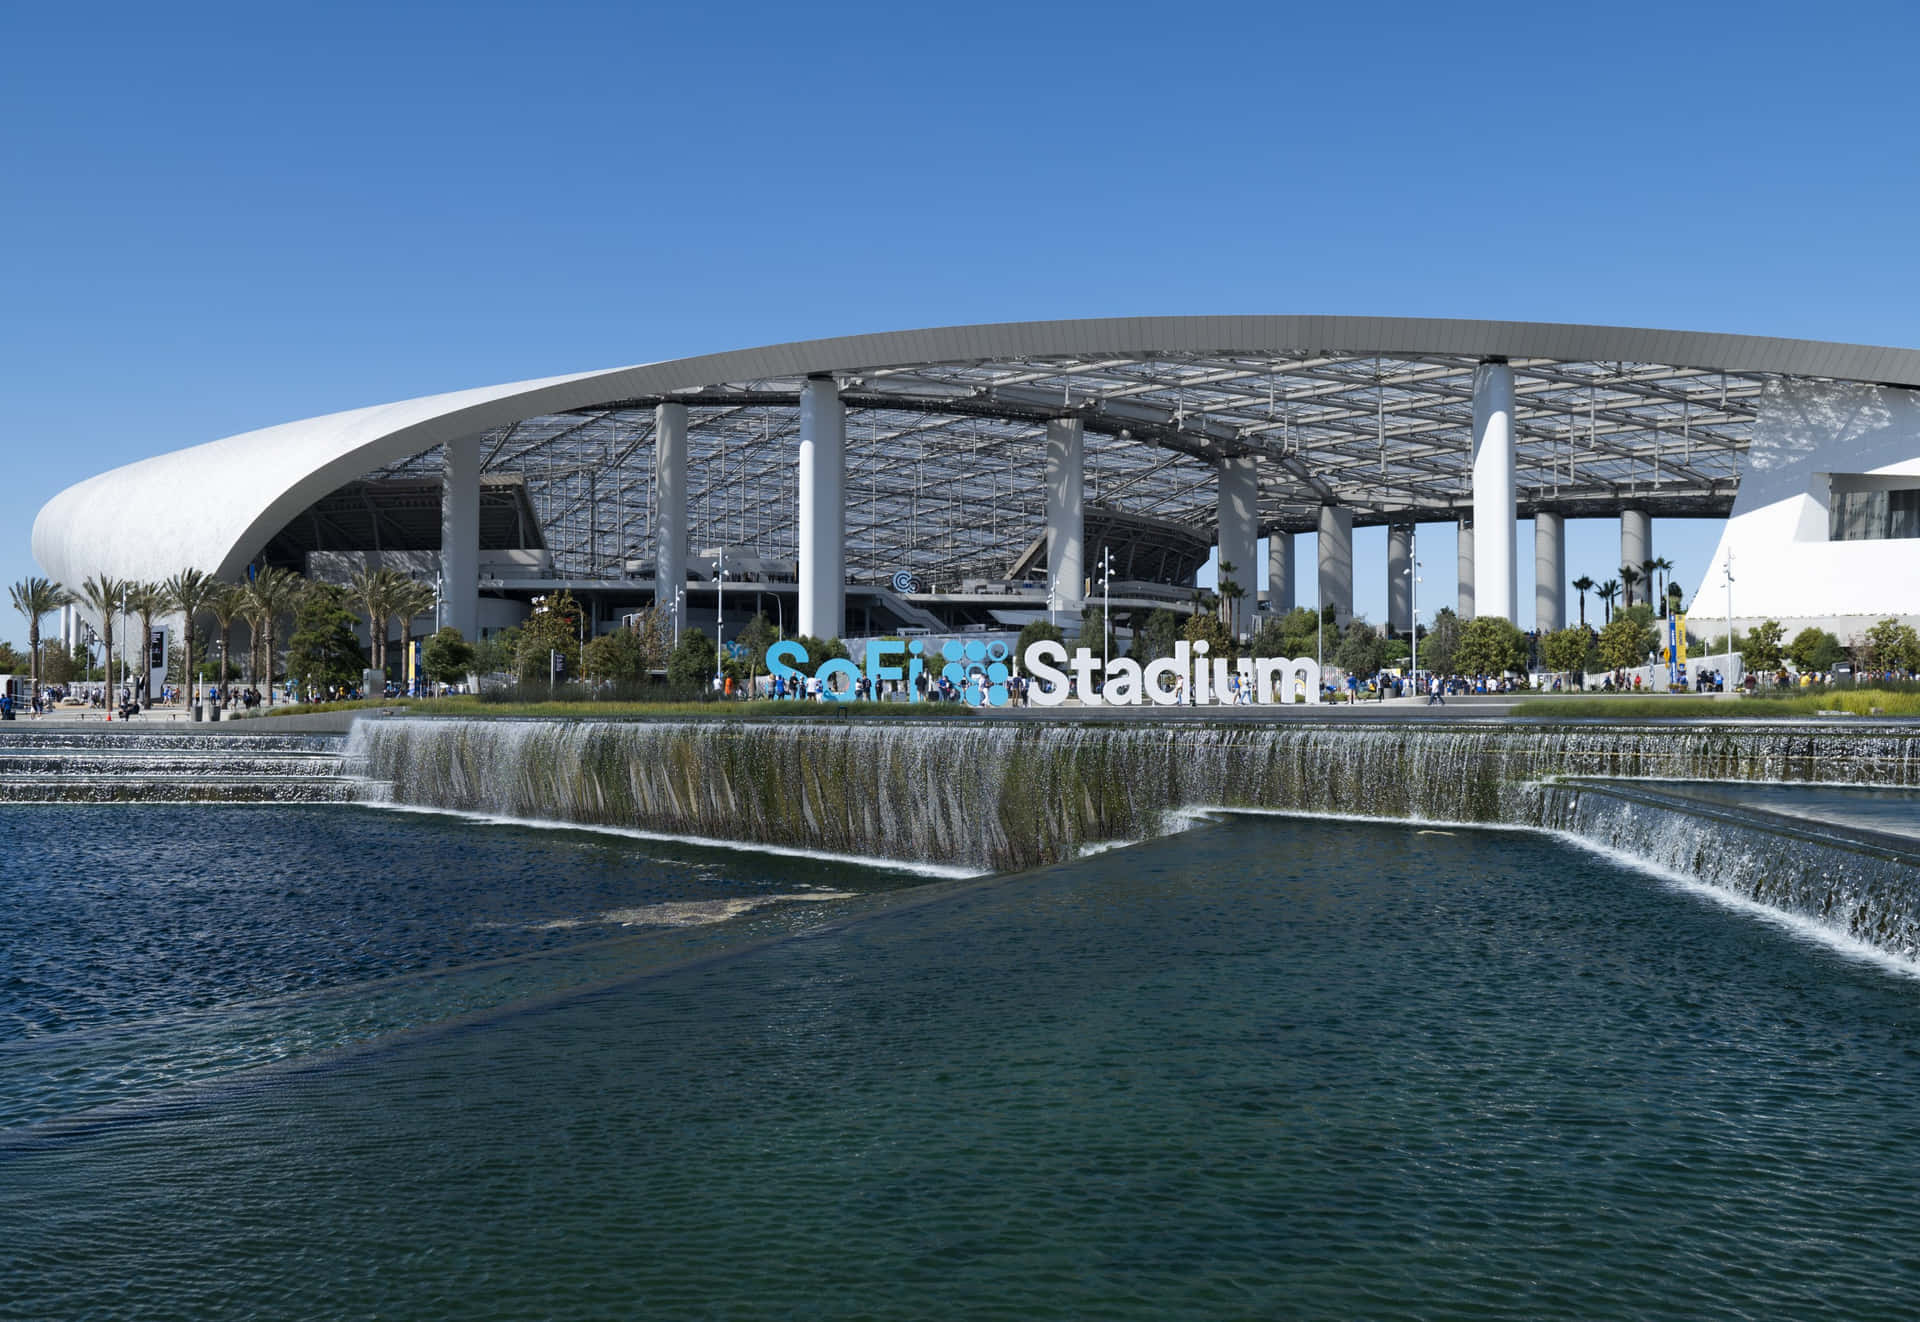 Sofi Stadium Transforms the Sports Experience